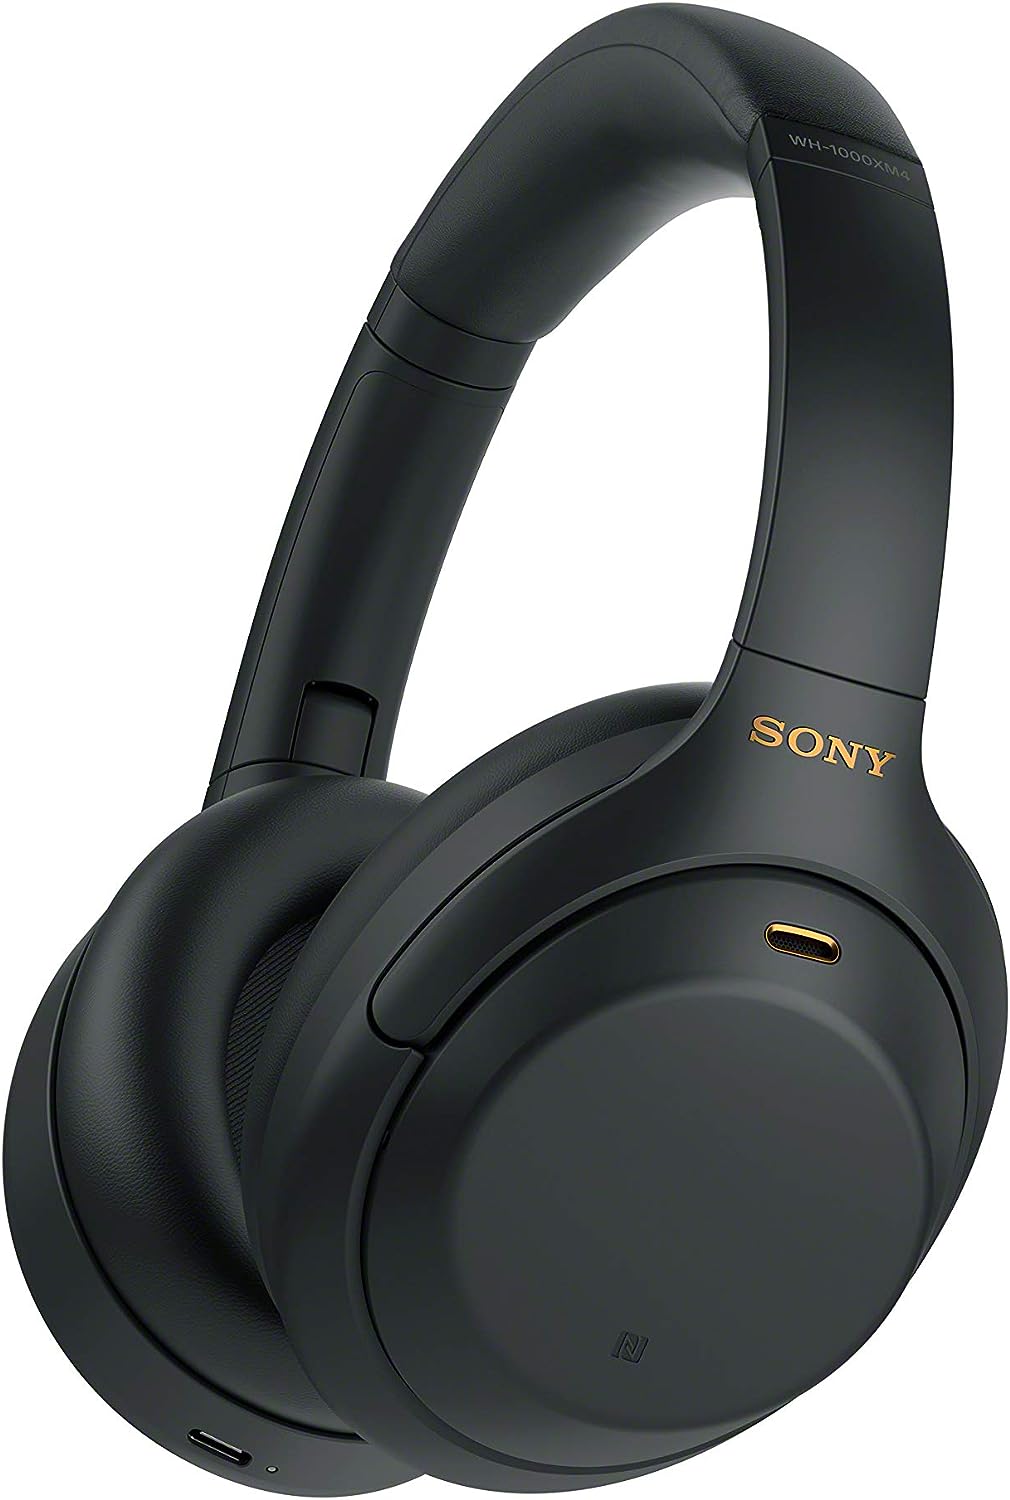 Sony WH-1000XM4 vs Bose QuietComfort SE vs Beats Solo 3